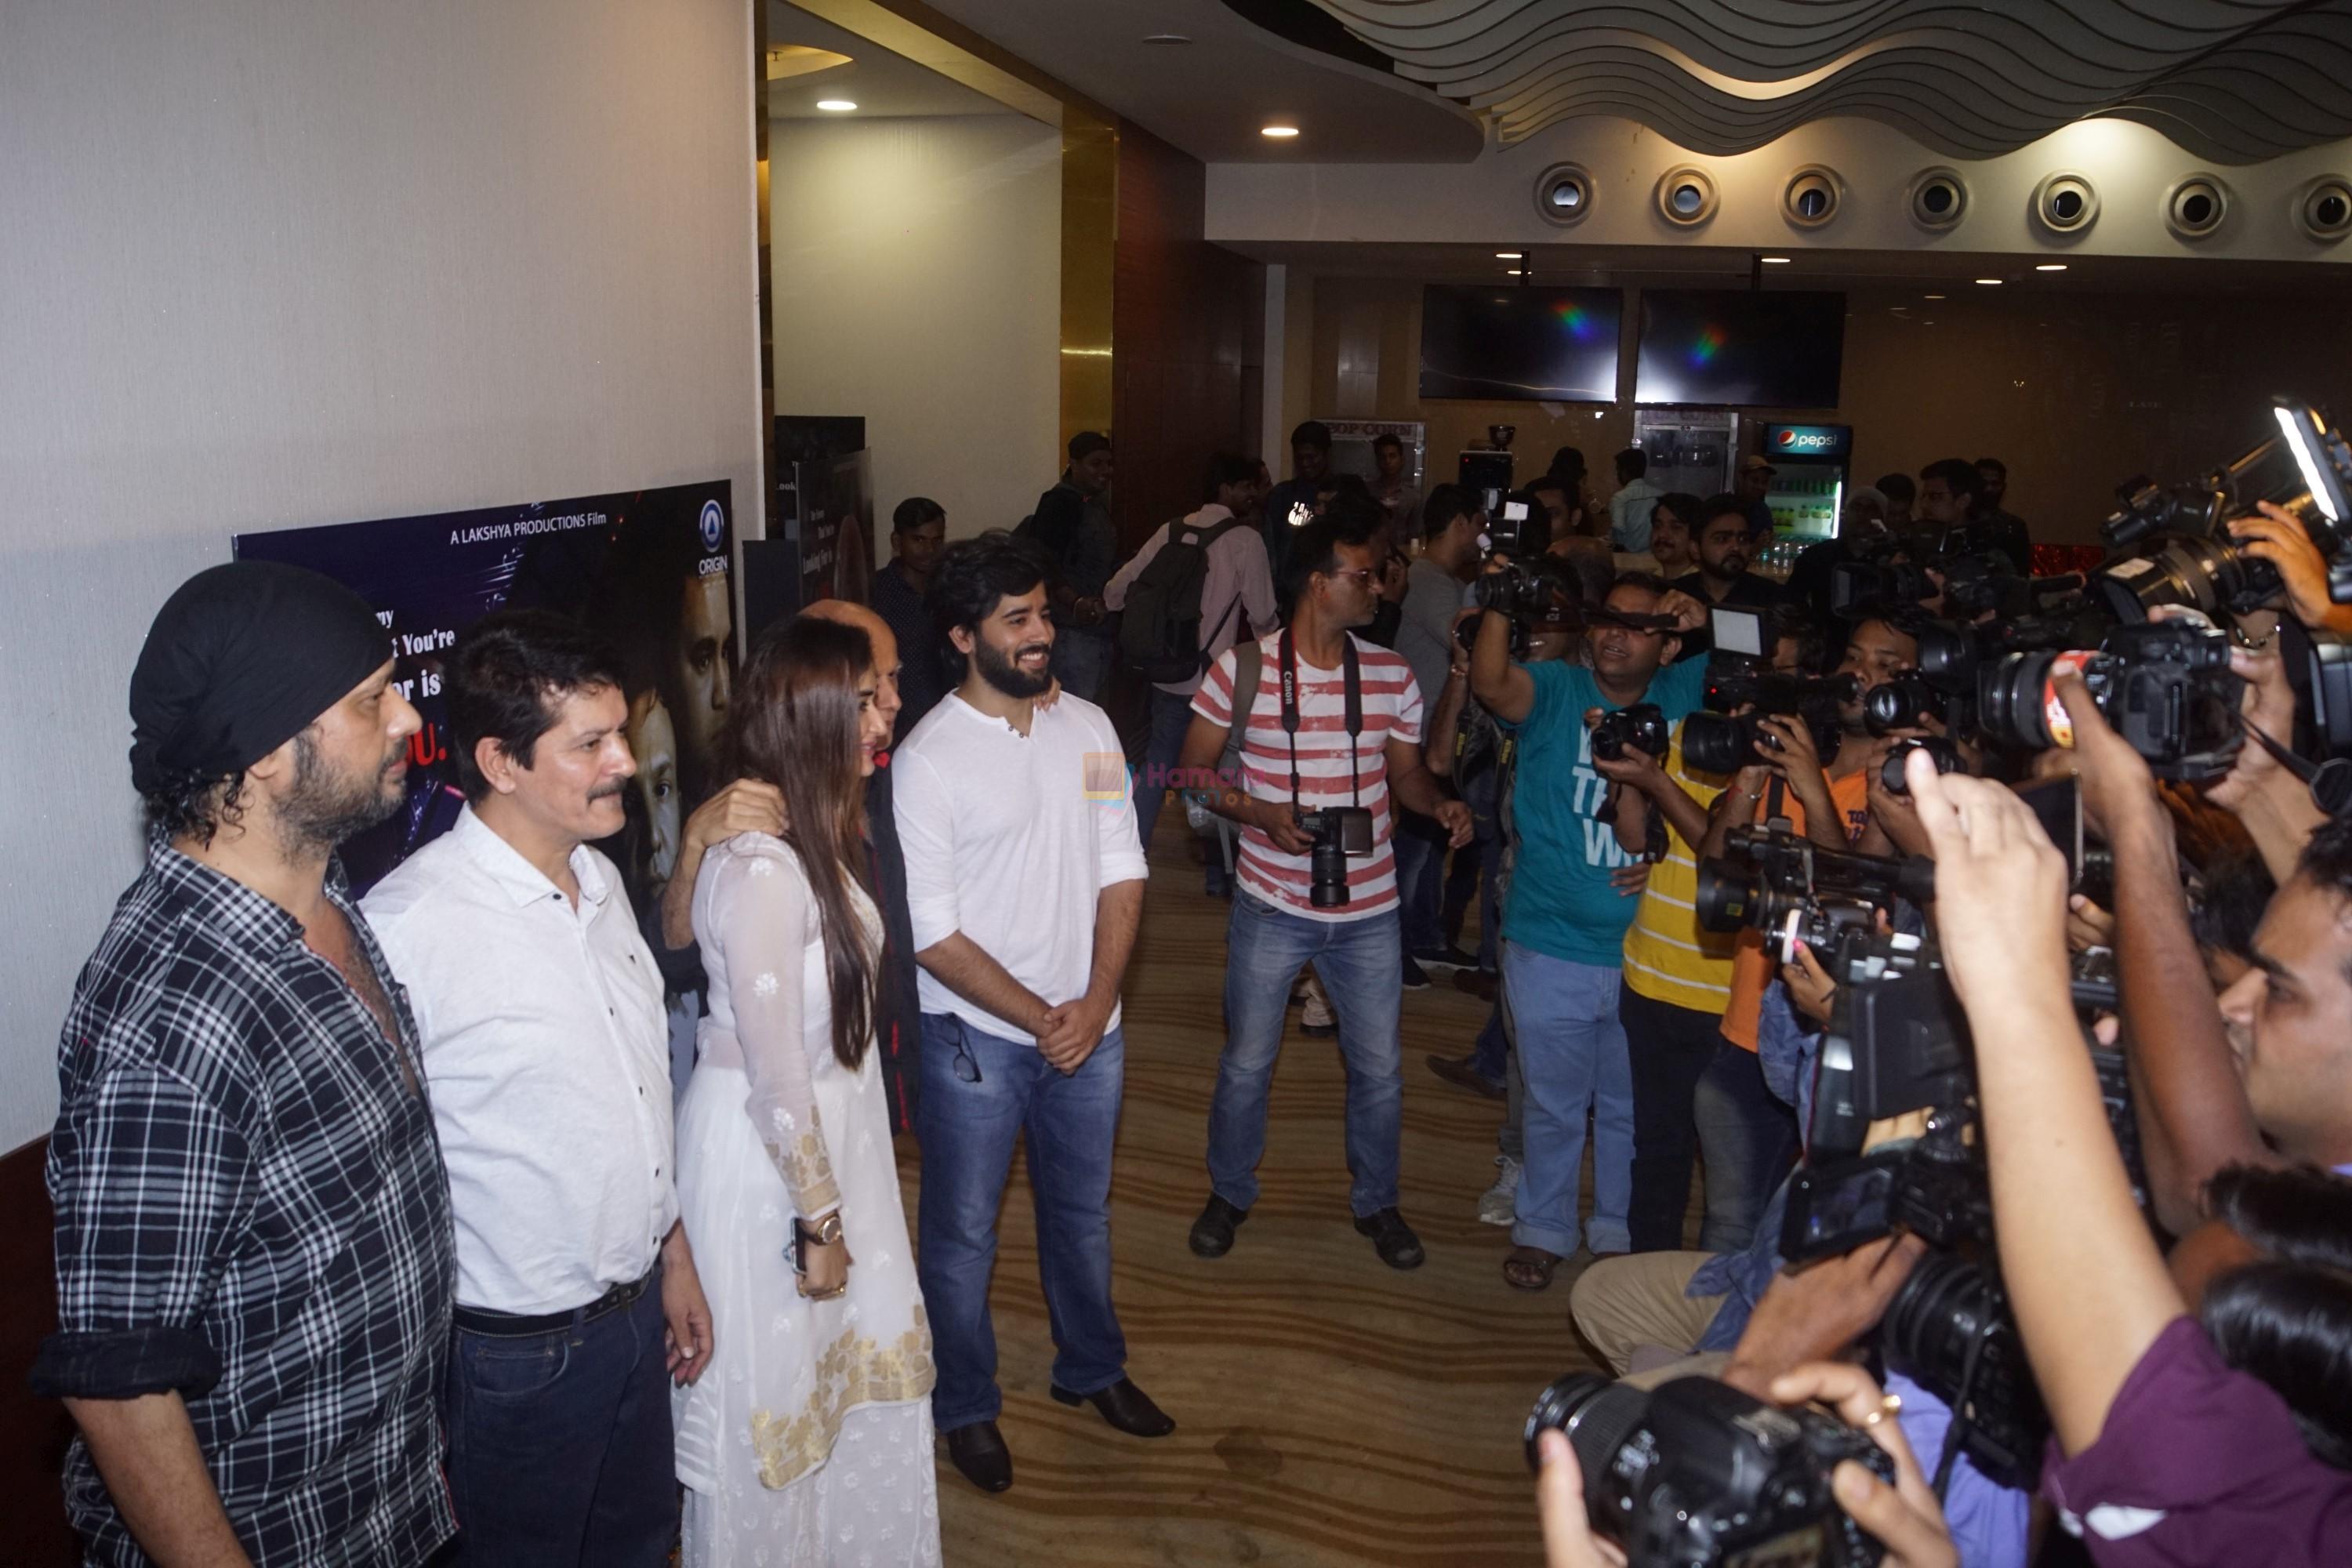 Avi, Alisha Khan, Tariq Khan, Mahesh Bhatt at the Trailer Launch of film The Dark Side of Life-Mumbai City in Mumbai on 10th Sept 2018